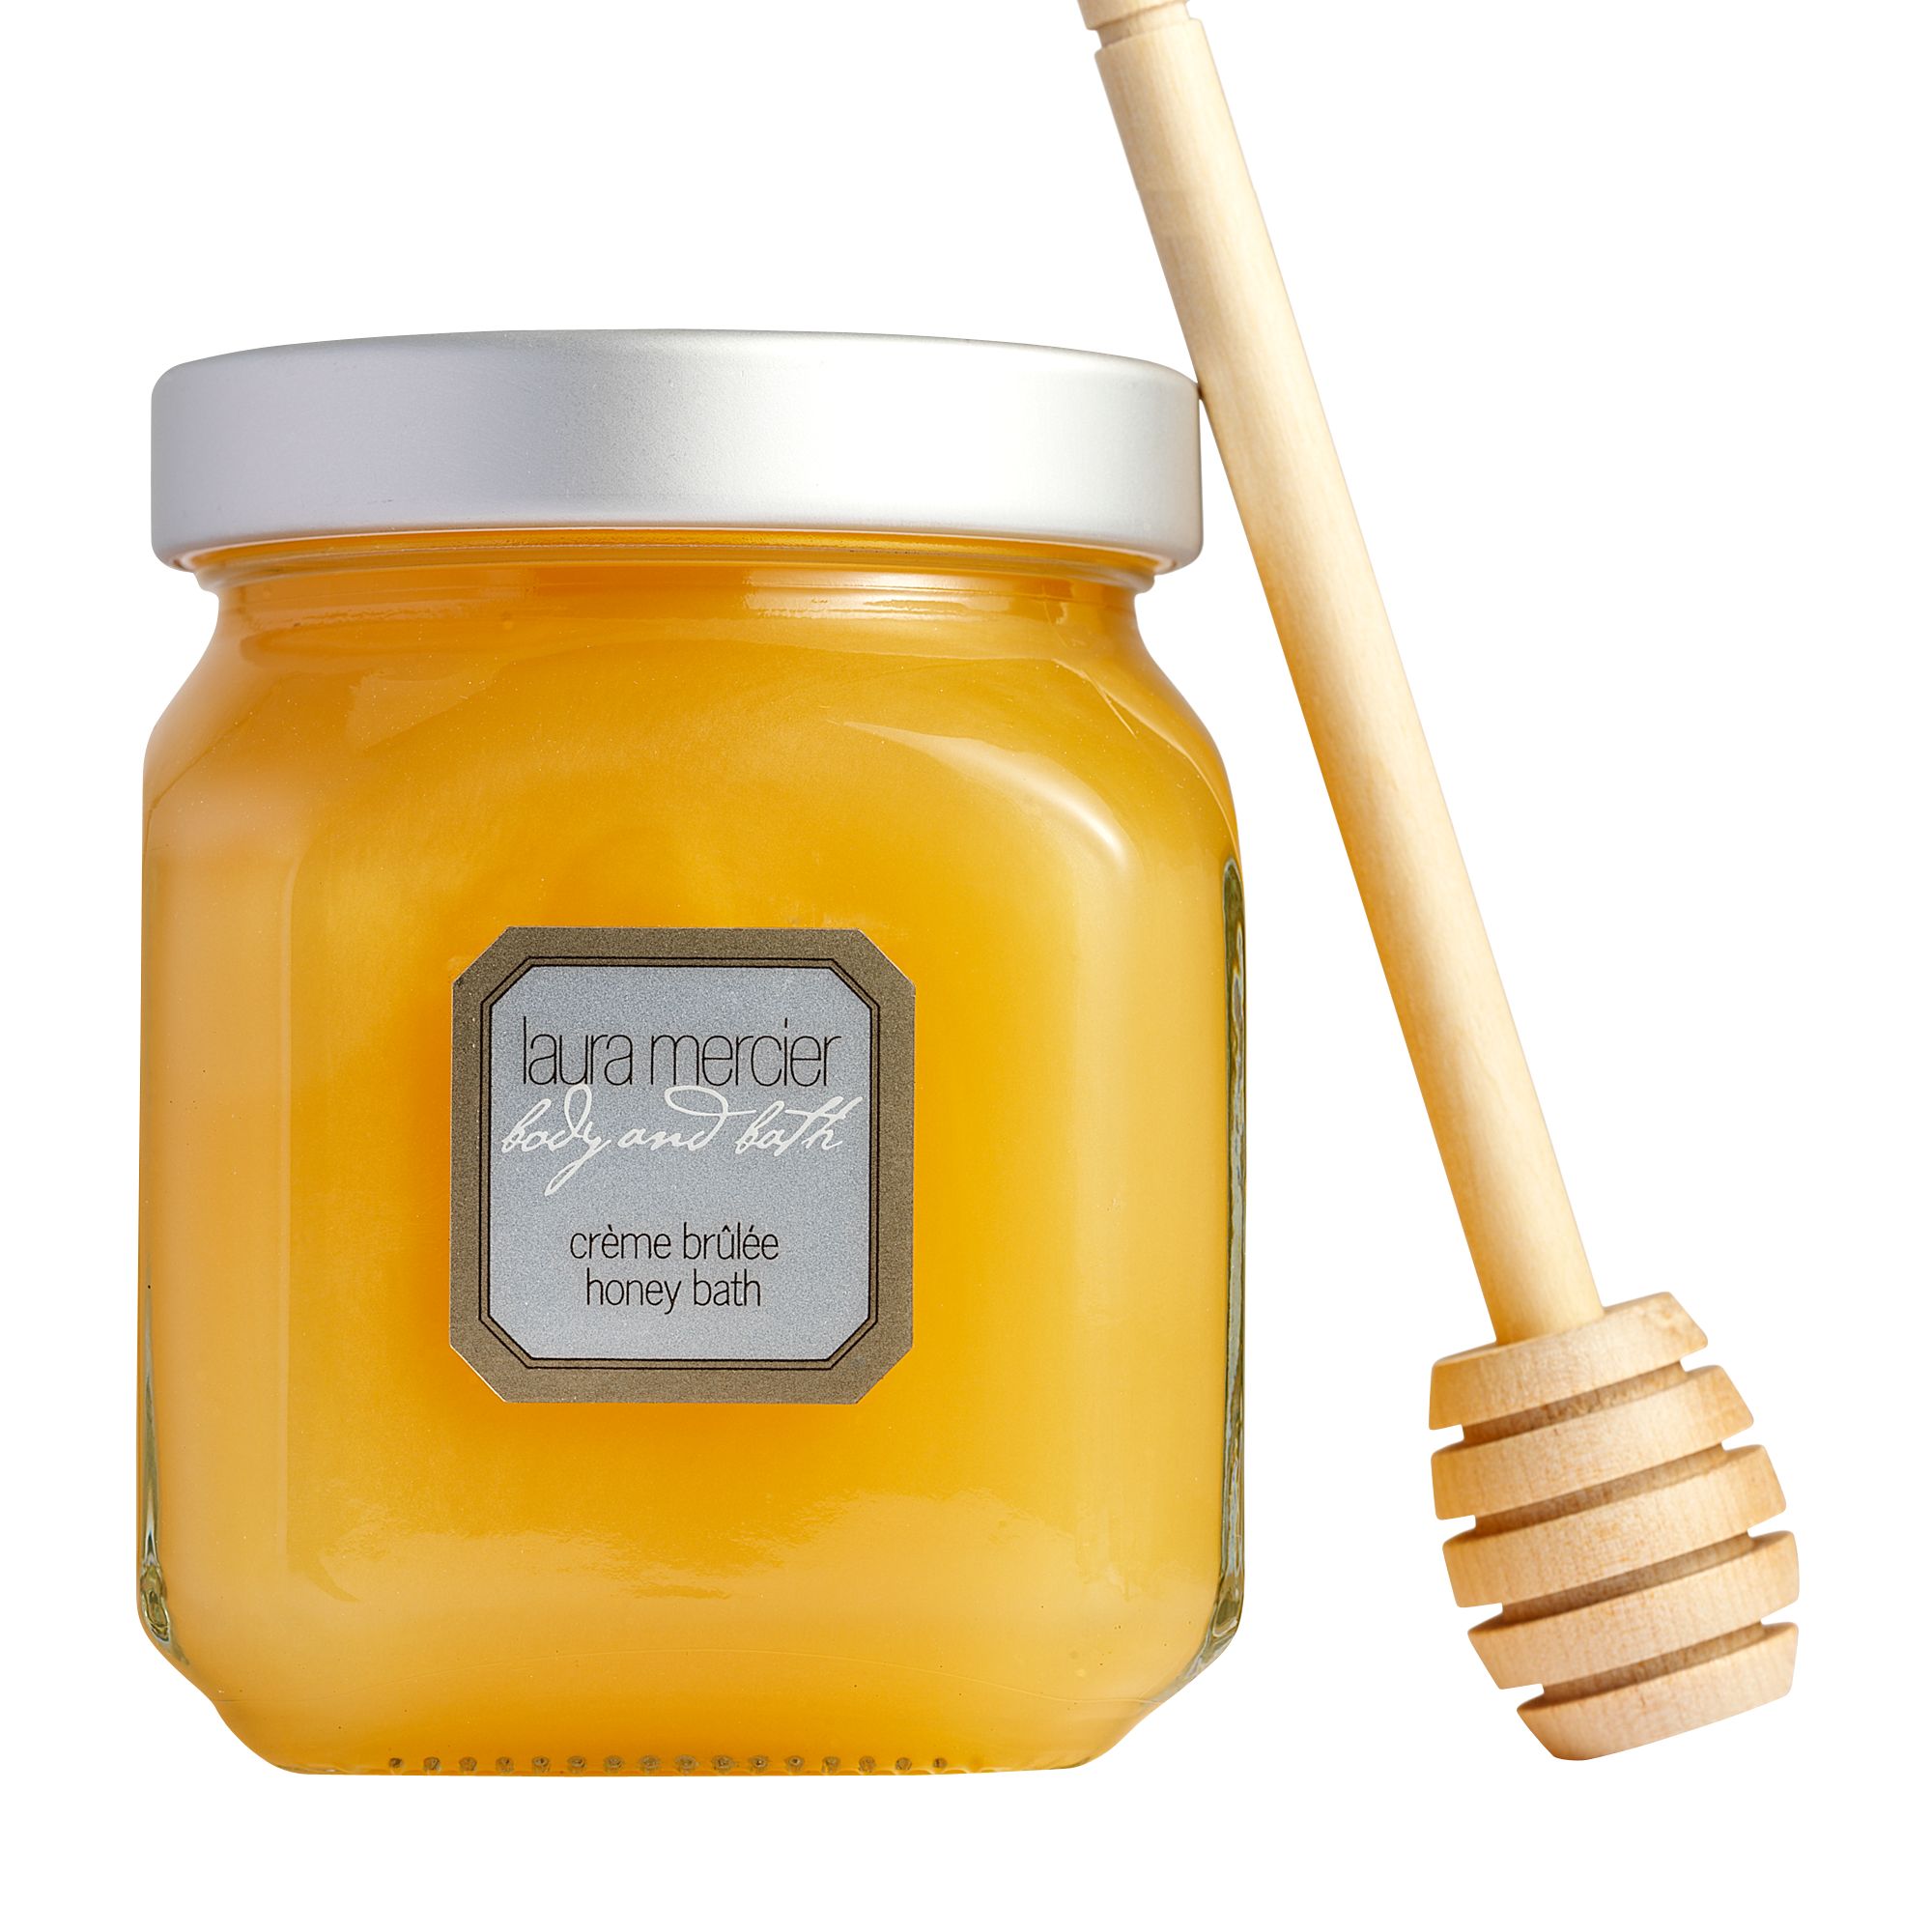 Laura Mercier Crème Brulee Honey Bath 300g At John Lewis And Partners 